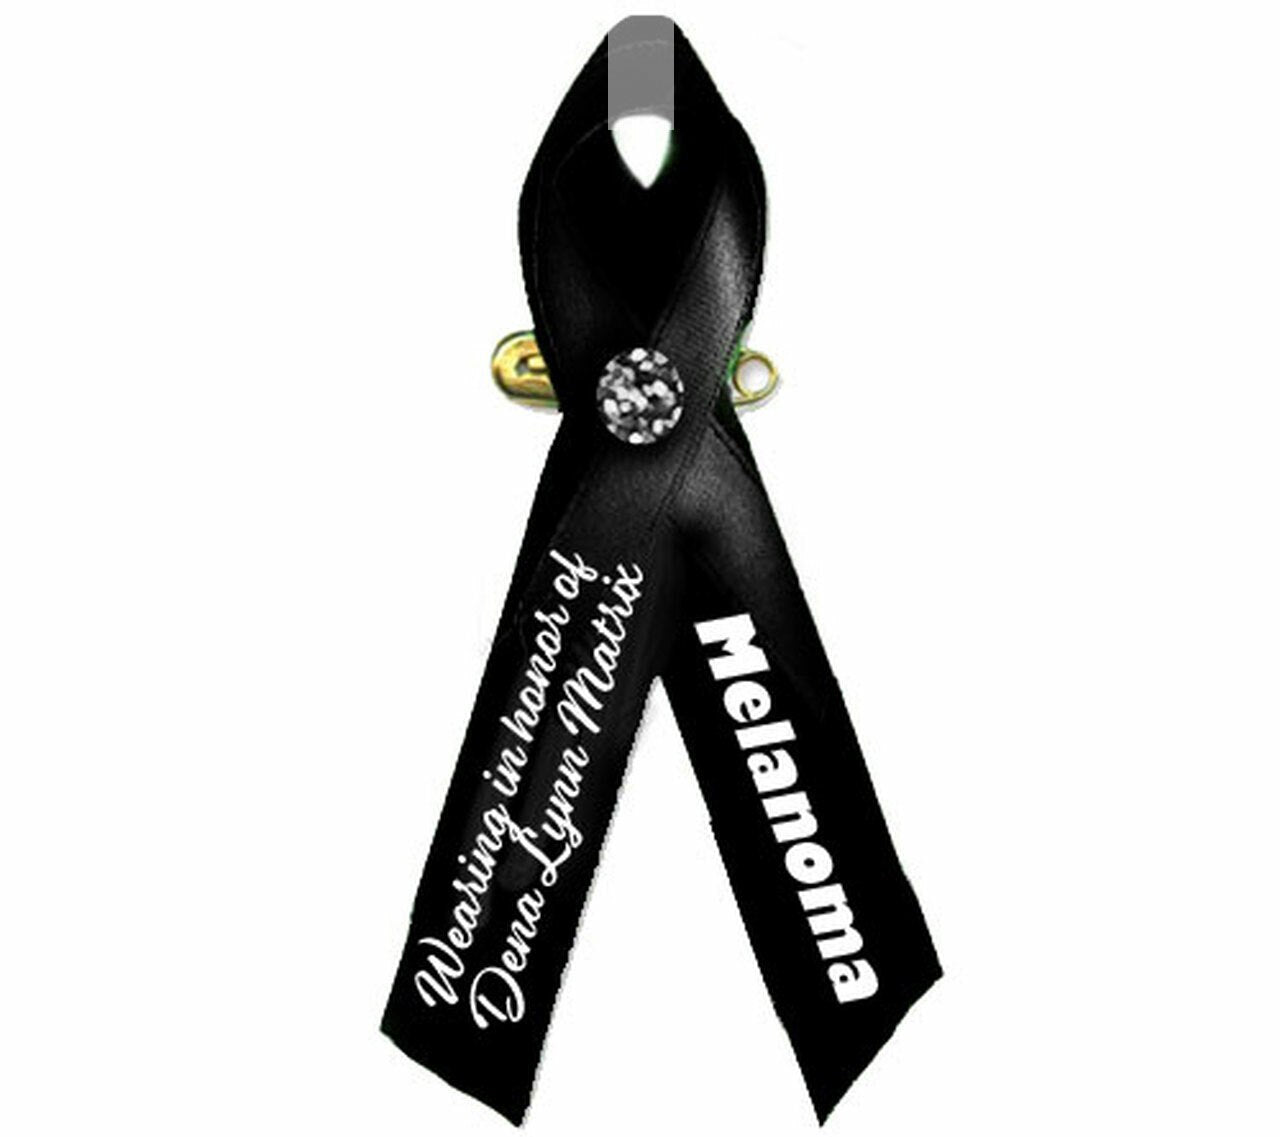 Personalized Awareness Melanoma Cancer Ribbon (Black) - Pack of 10.